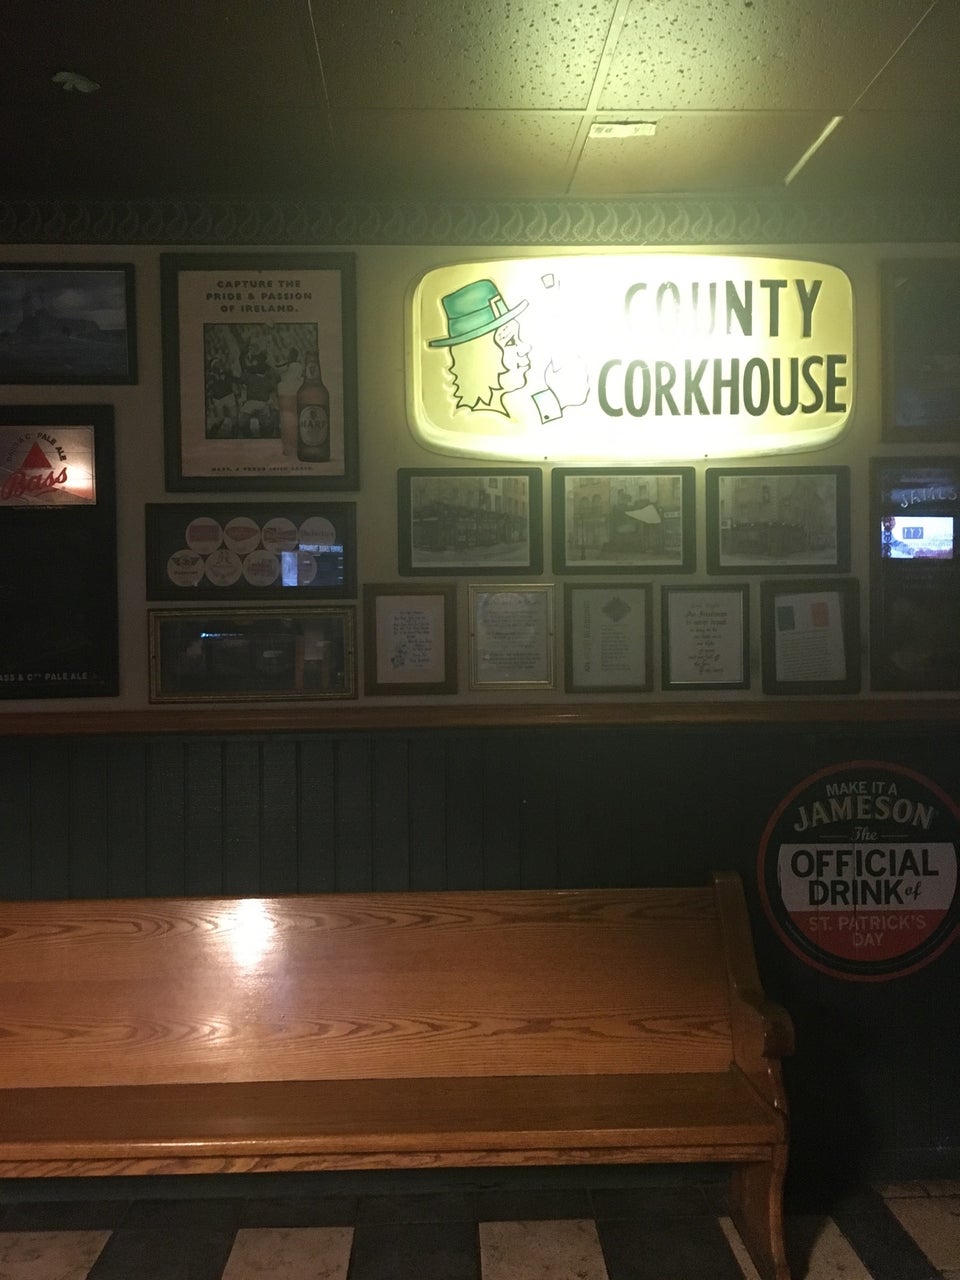 Photo of McNally's Irish Pub